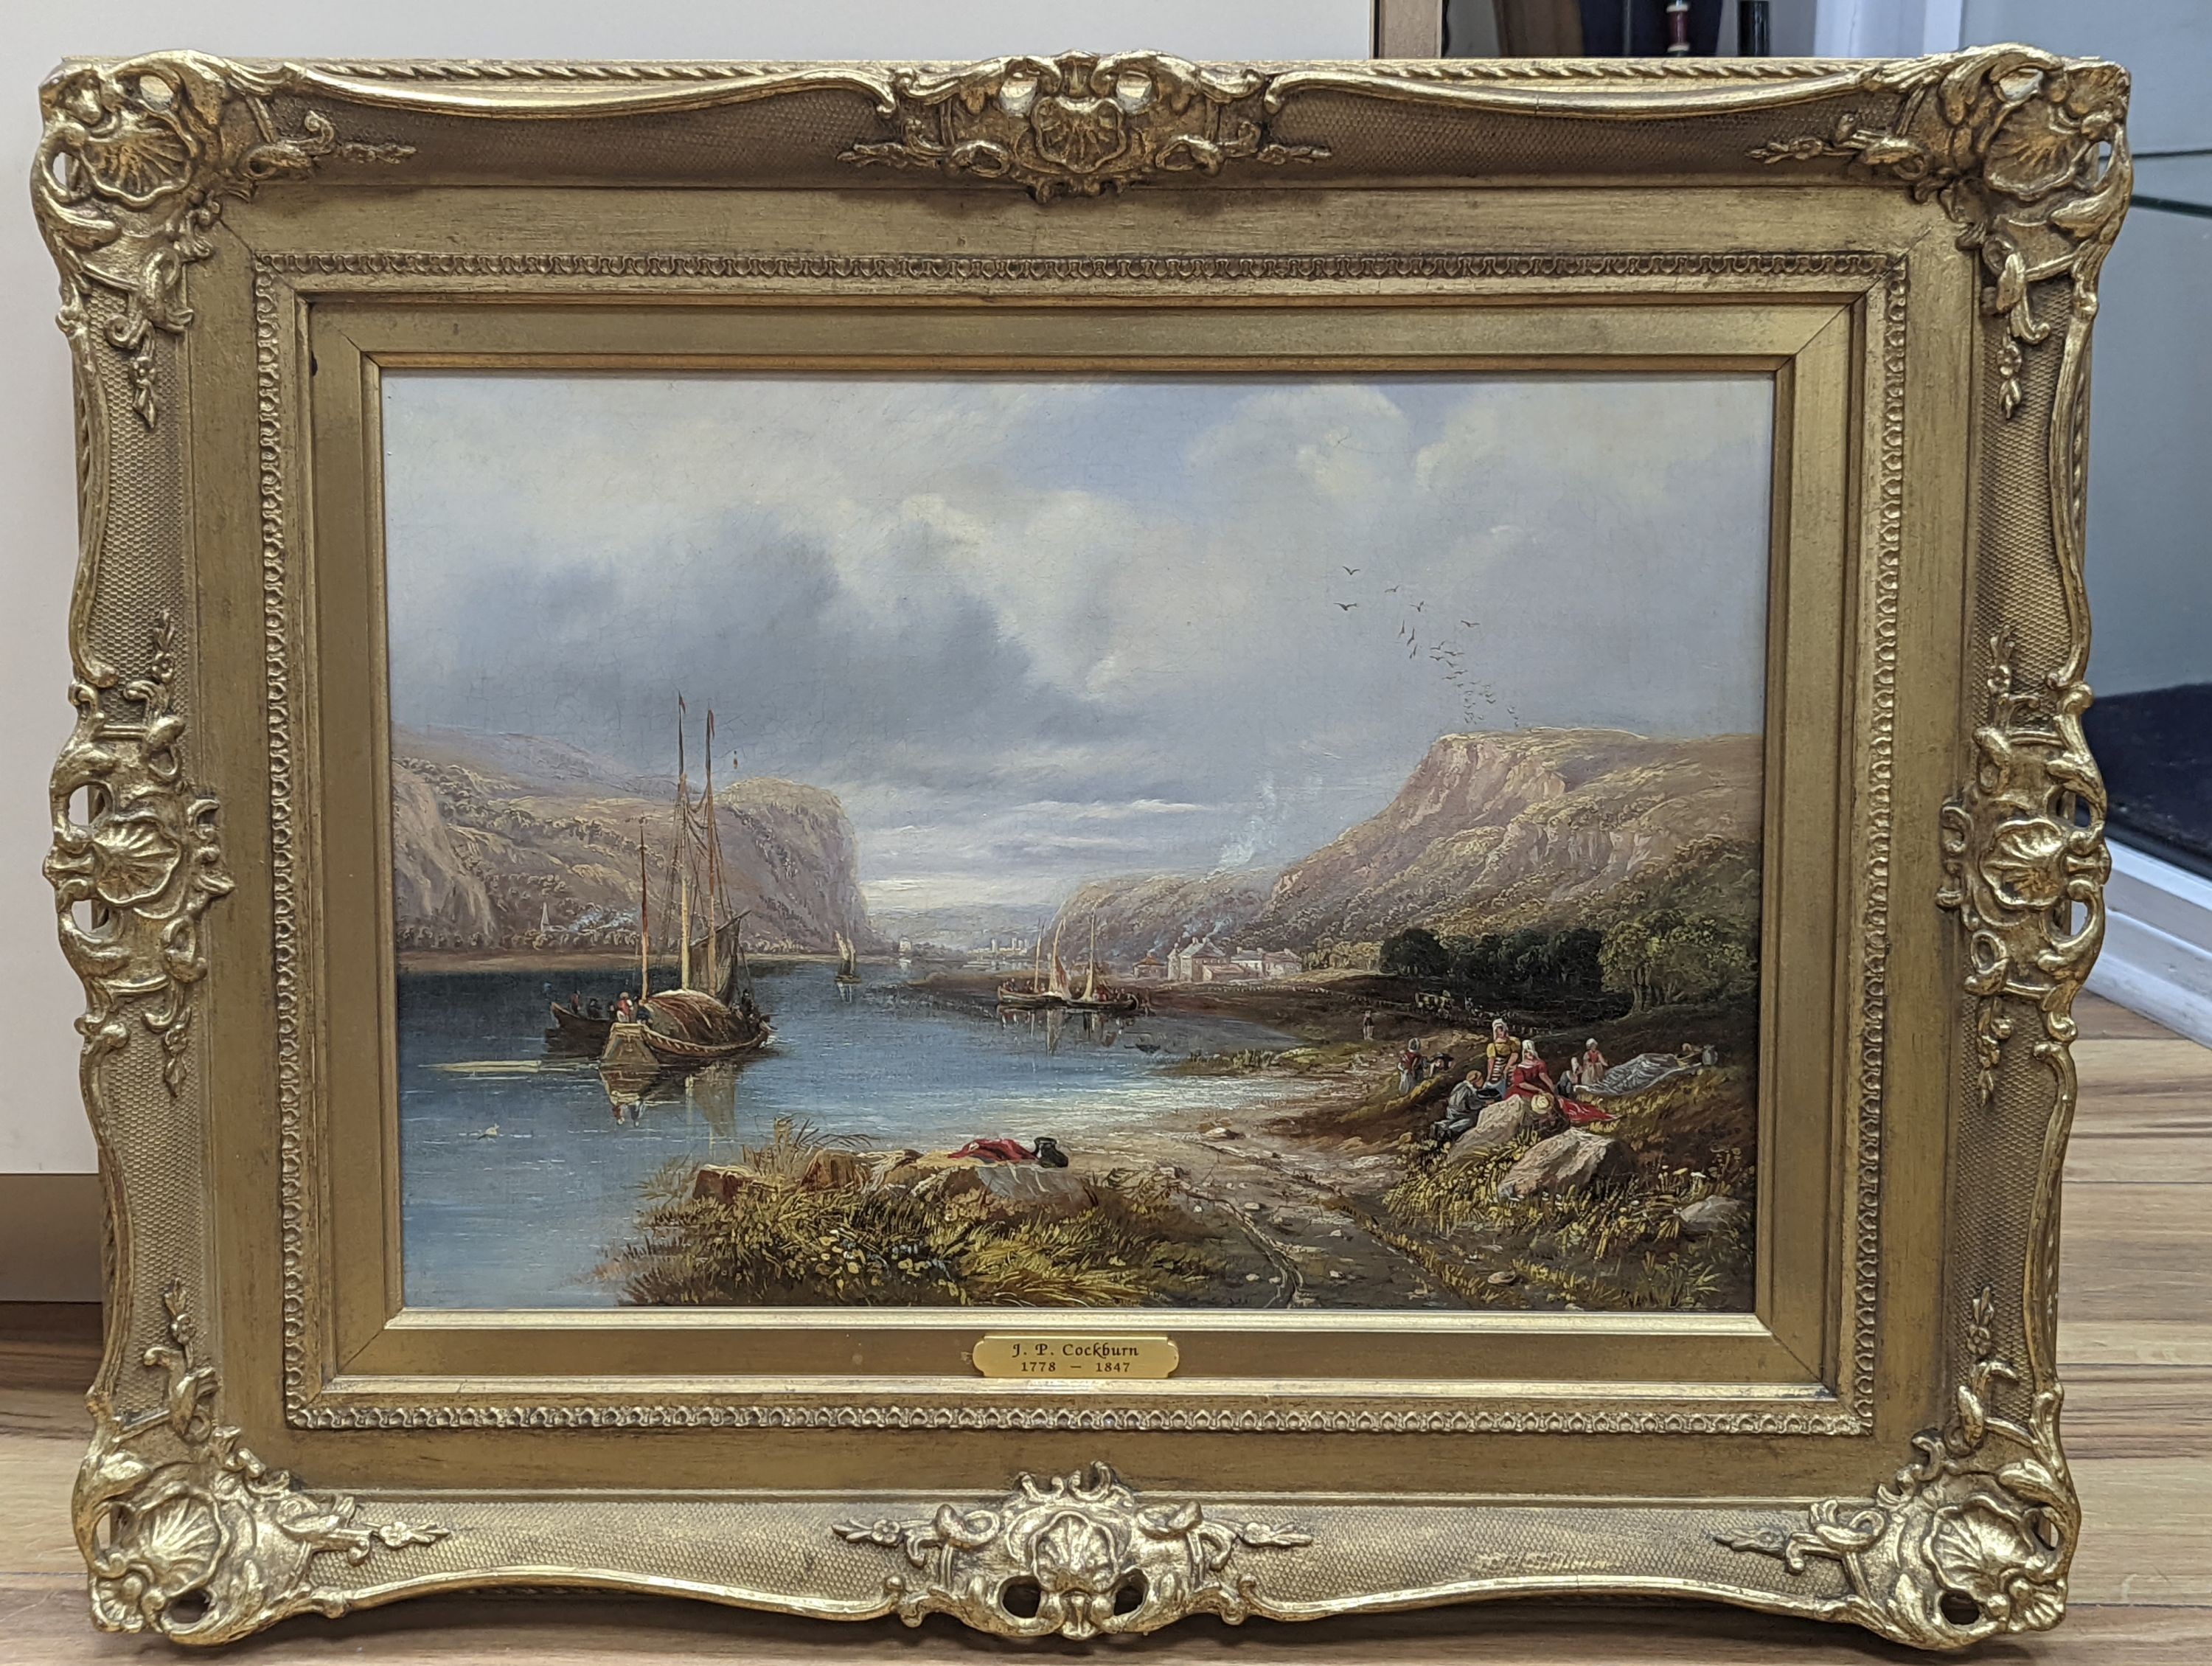 Attributed to James Pattison Cockburn, oil on canvas, lake scene 28.5x41cm